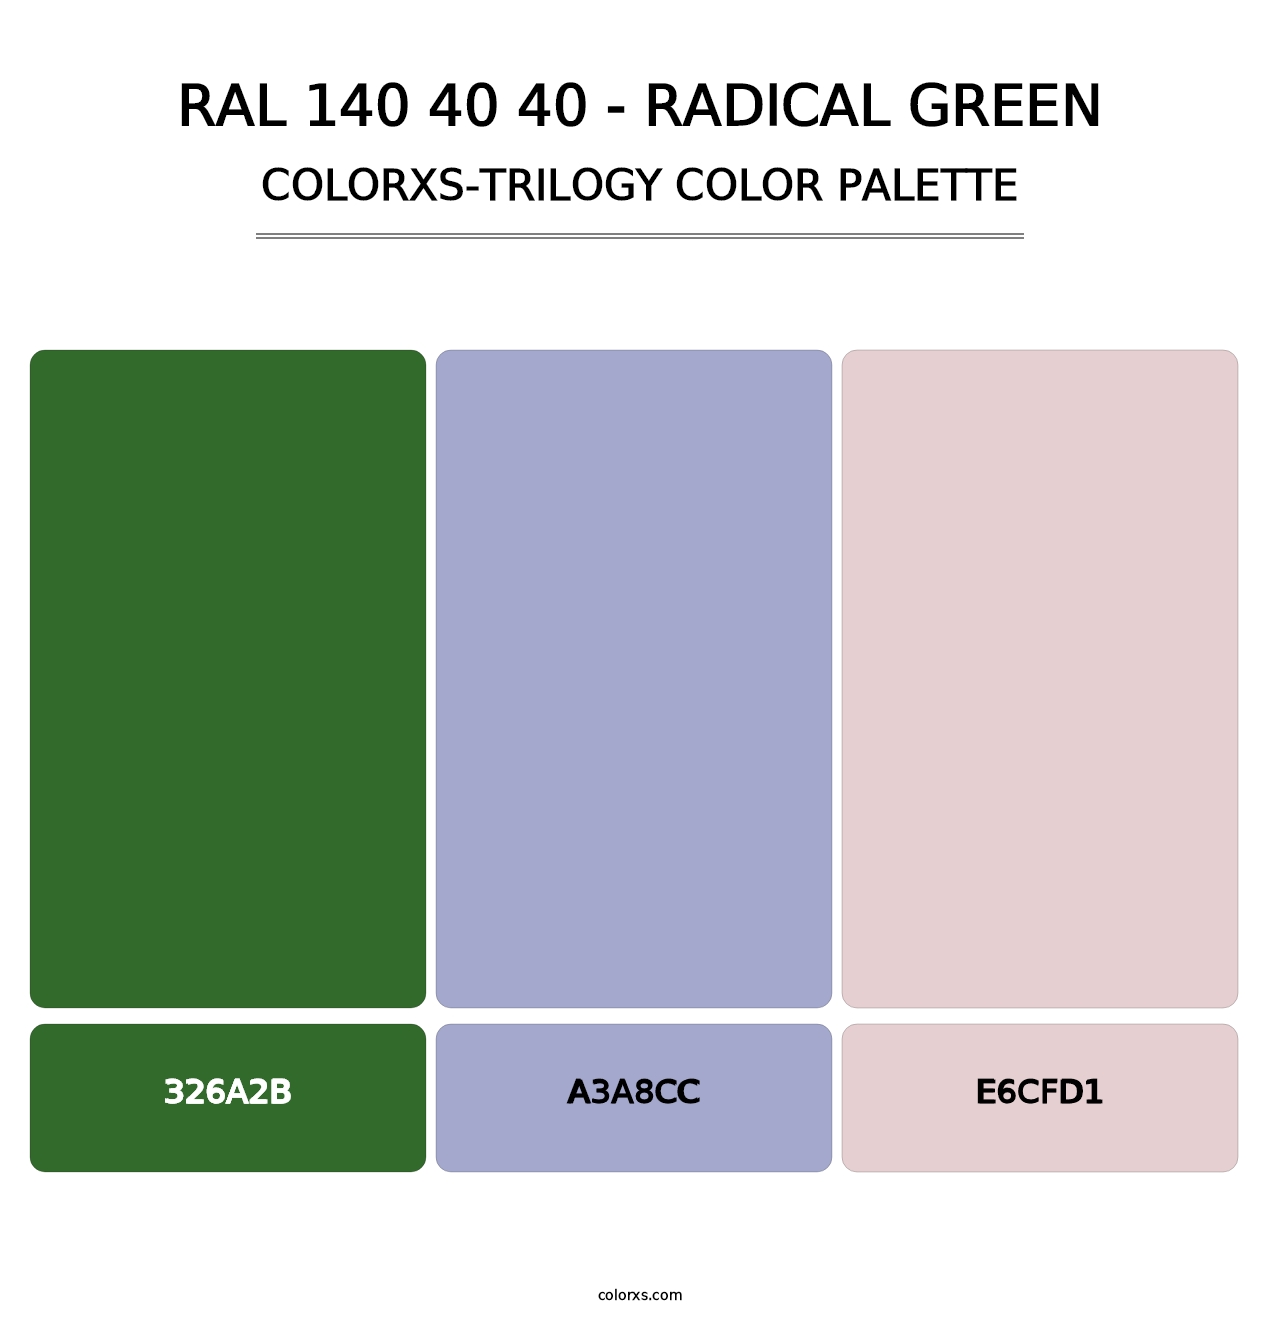 RAL 140 40 40 - Radical Green - Colorxs Trilogy Palette